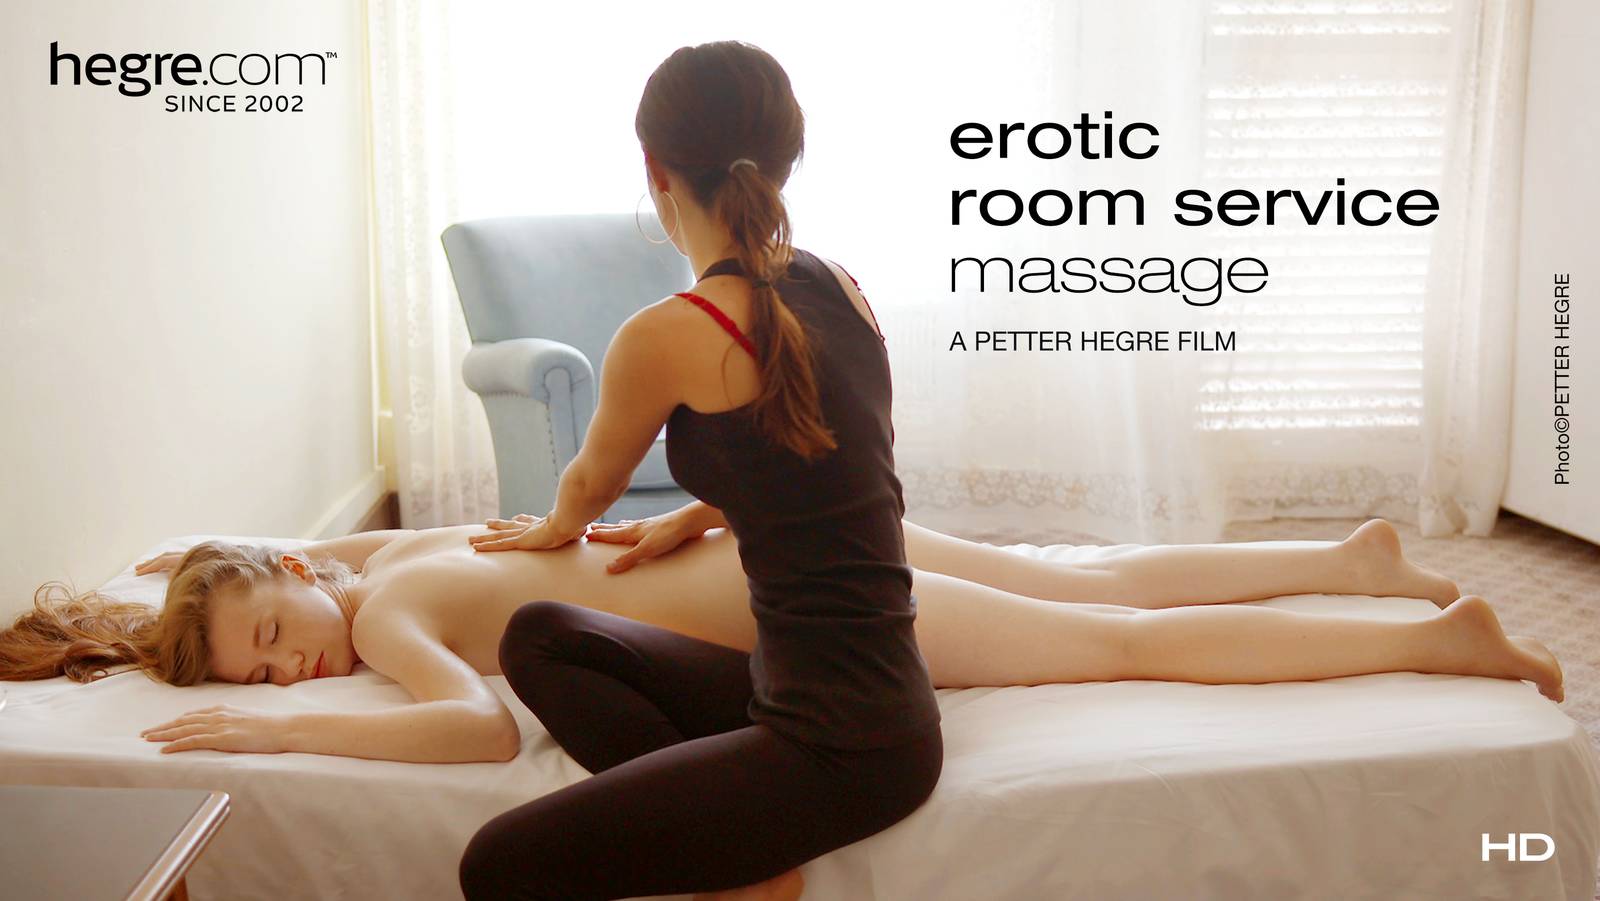 erotic-room-service-massage-board-image-1600x.jpg